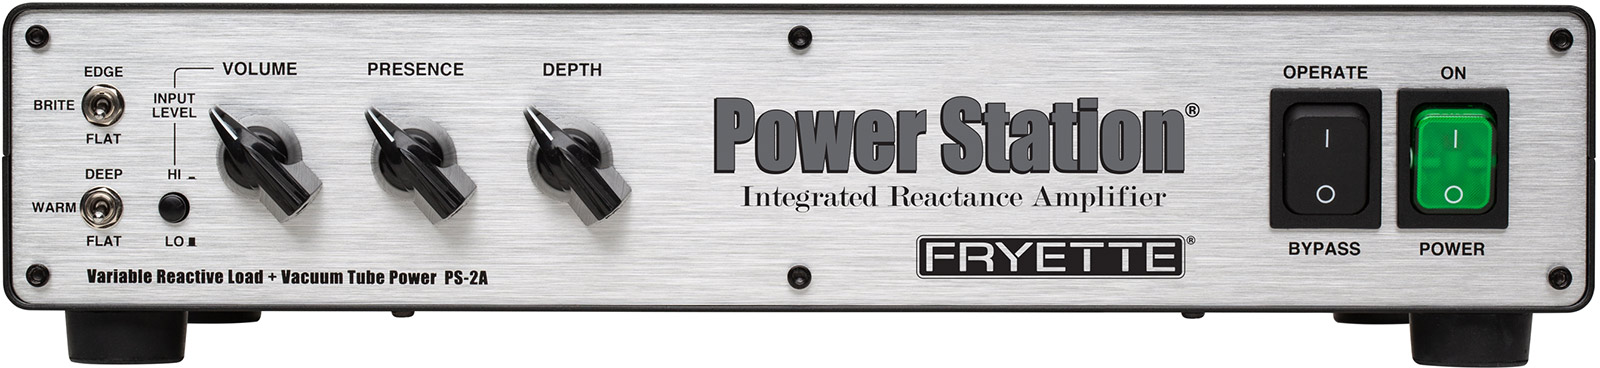 Fryette Power Station Ps2-a Reactive Load + Vacuum Tube Amp - Atenuador de potencia - Variation 1